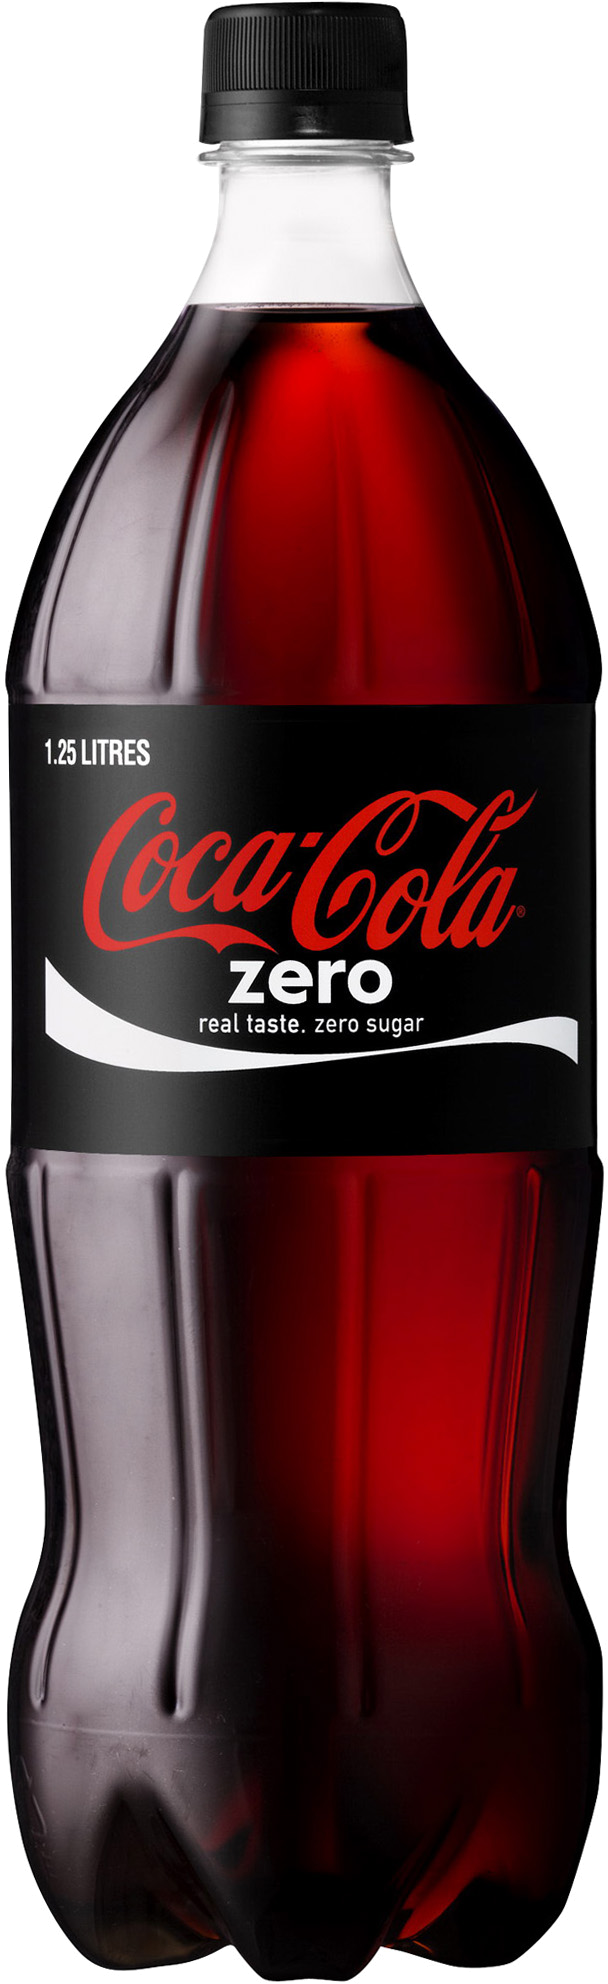 Coca Cola Bottle Png Image Coca Cola Zero